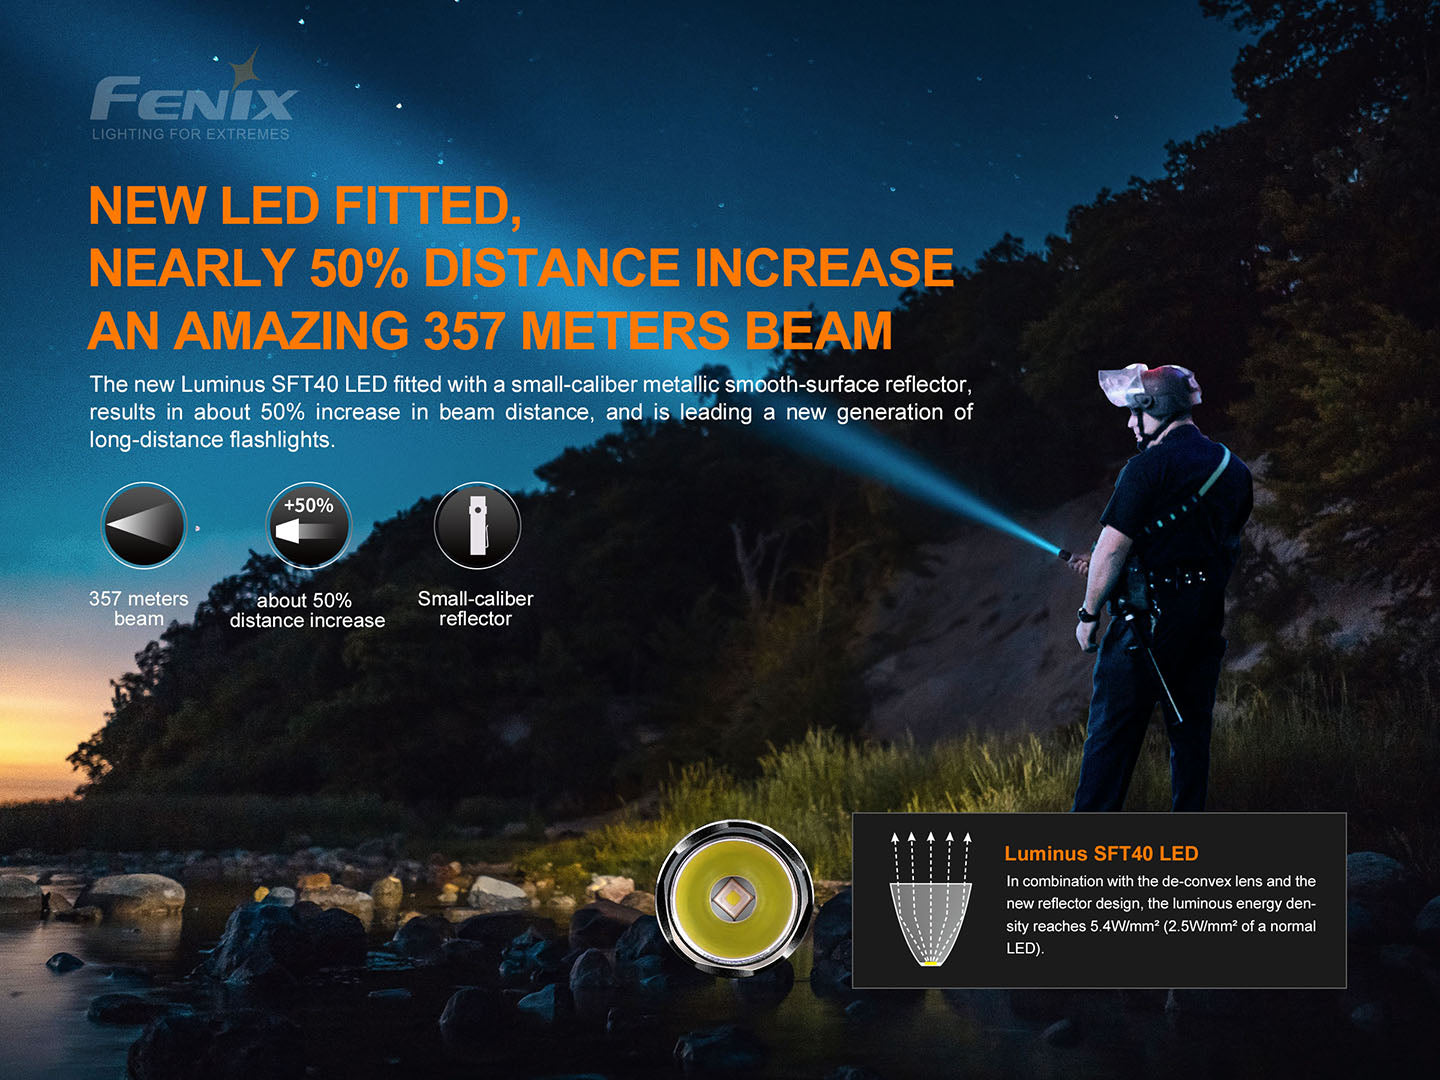 Fenix PD35 V3 Tactical Flashlight 1700 Lumens